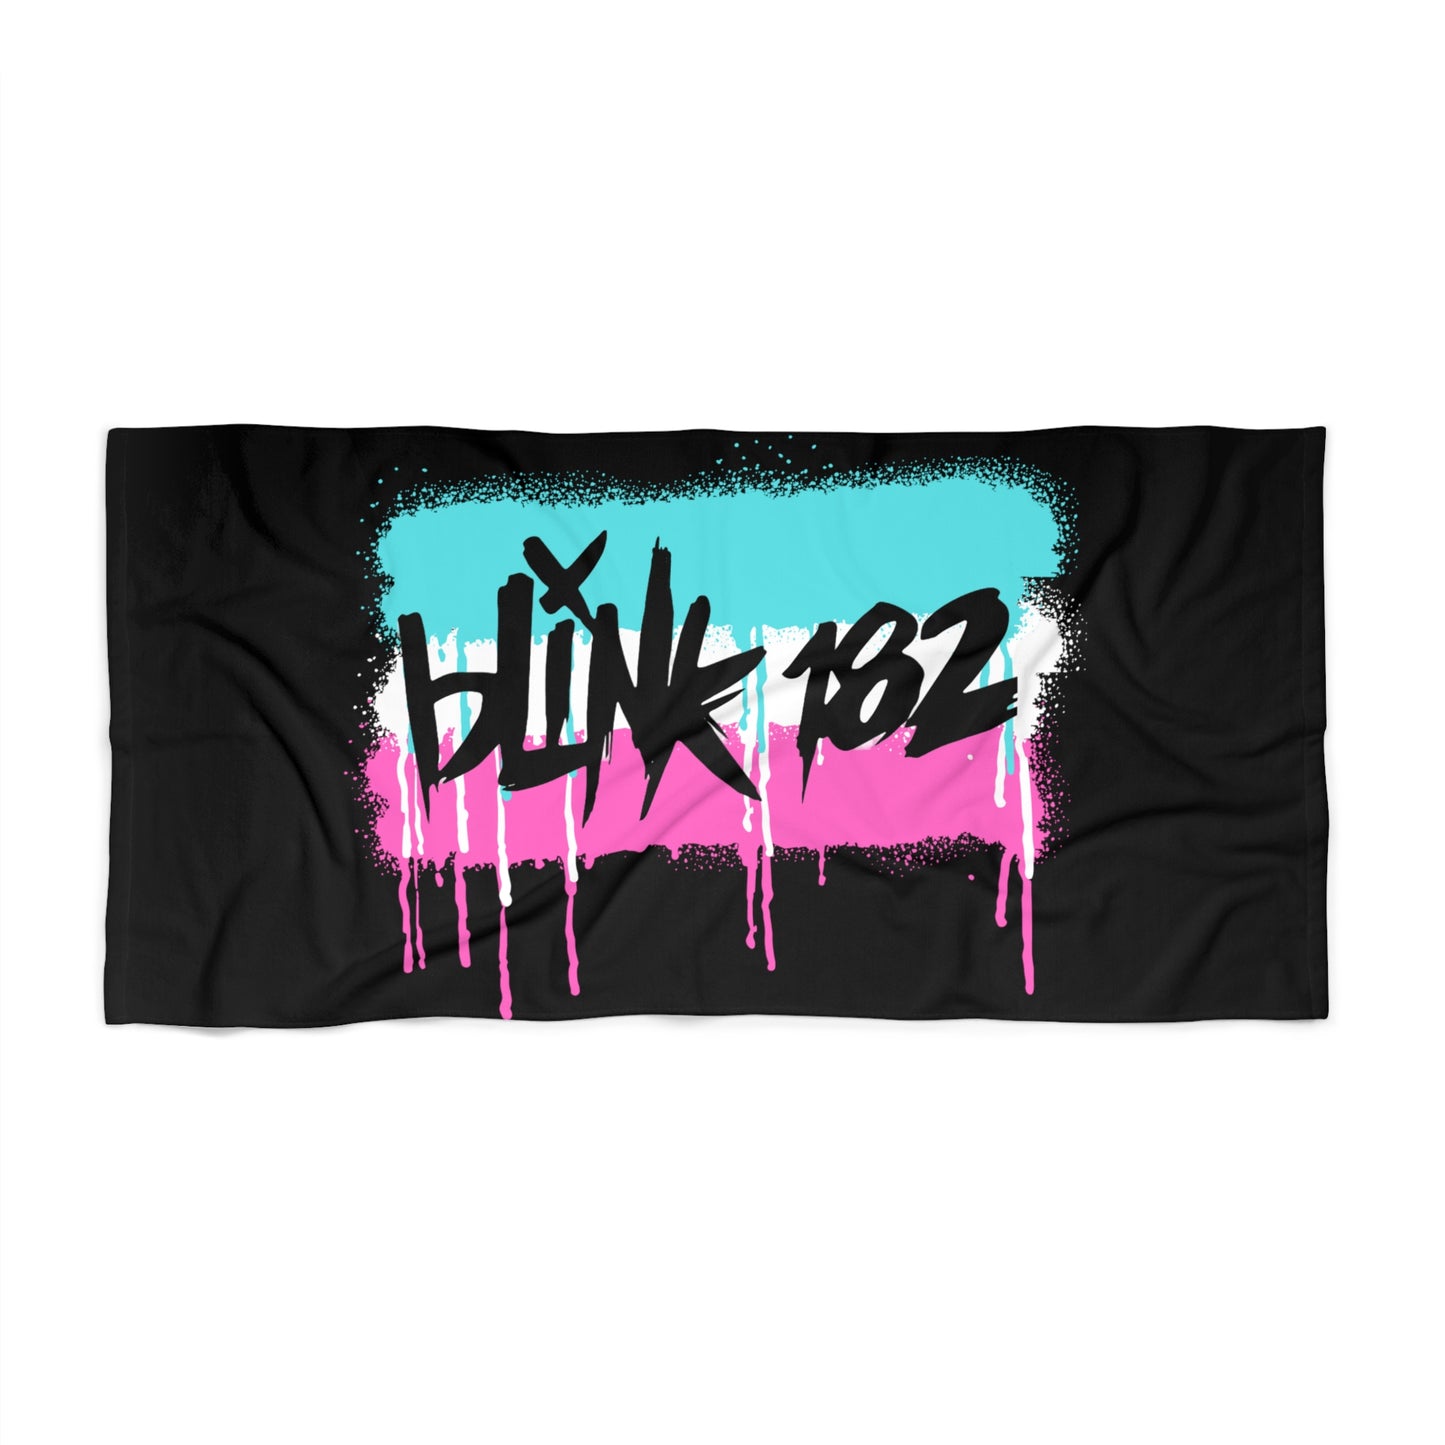 Blink 182 Beach Towel, Throwback to Old Blink